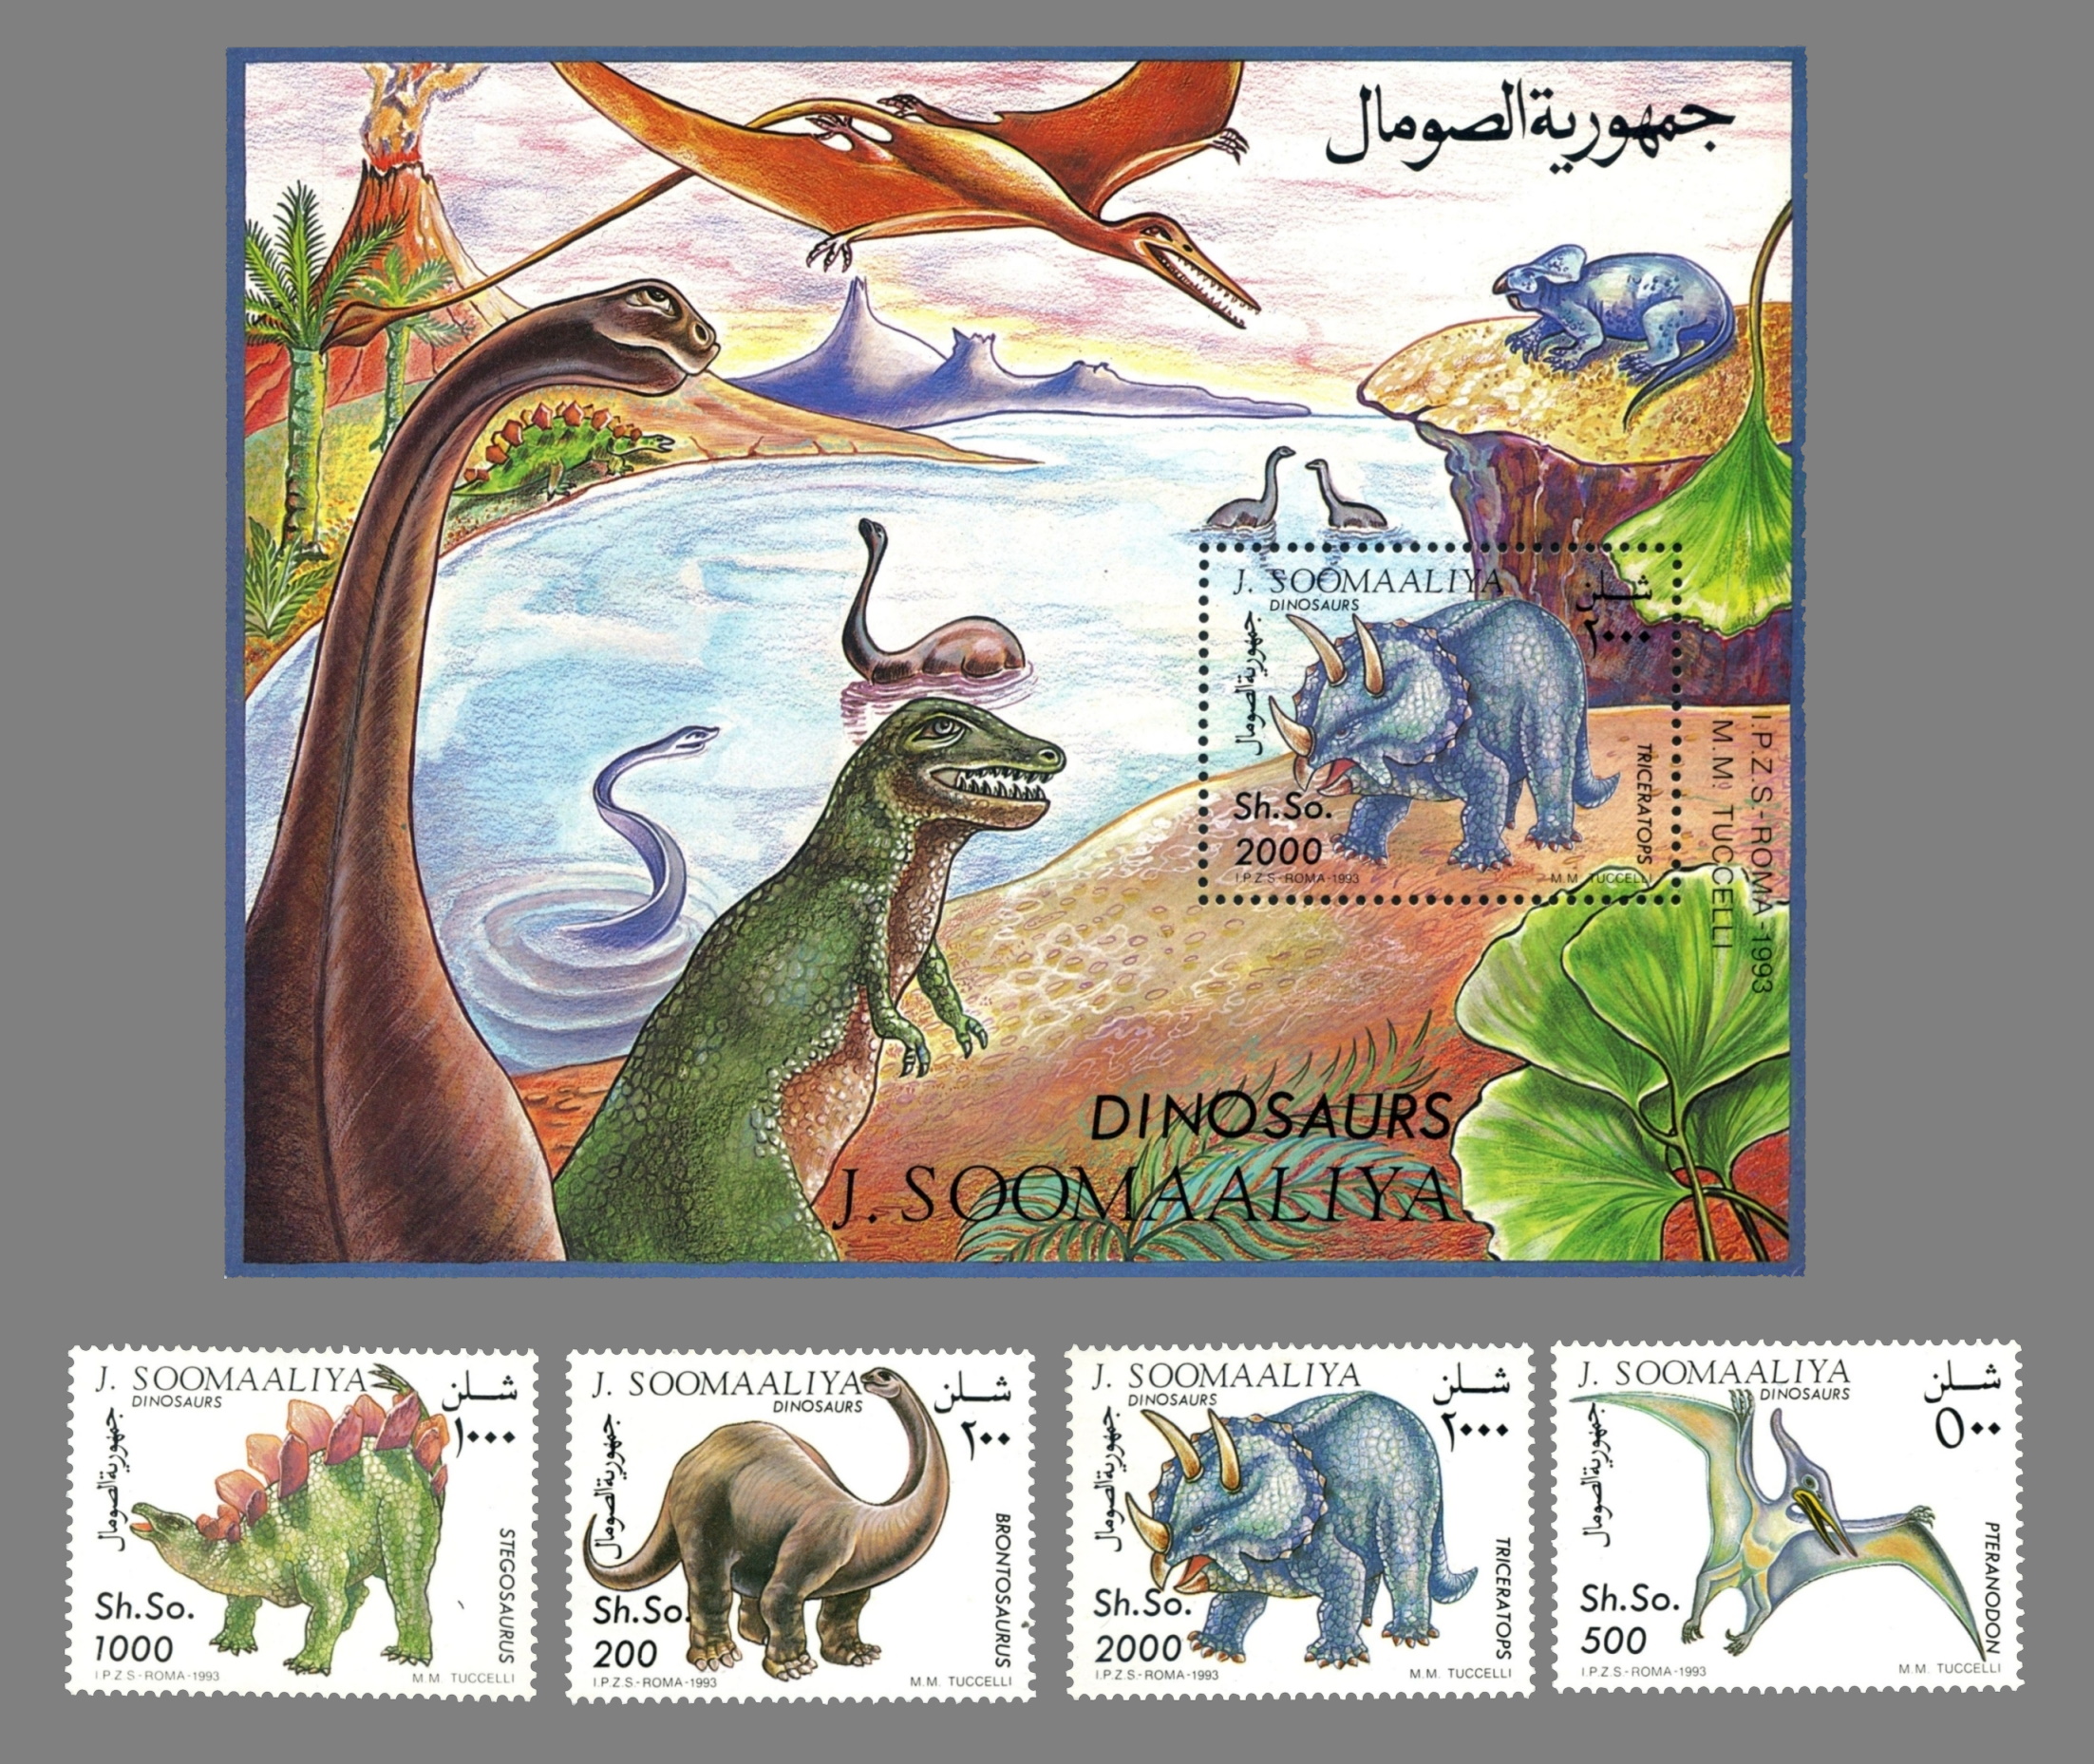 Paleophilatelie.eu - paleontology related stamps of Somalia